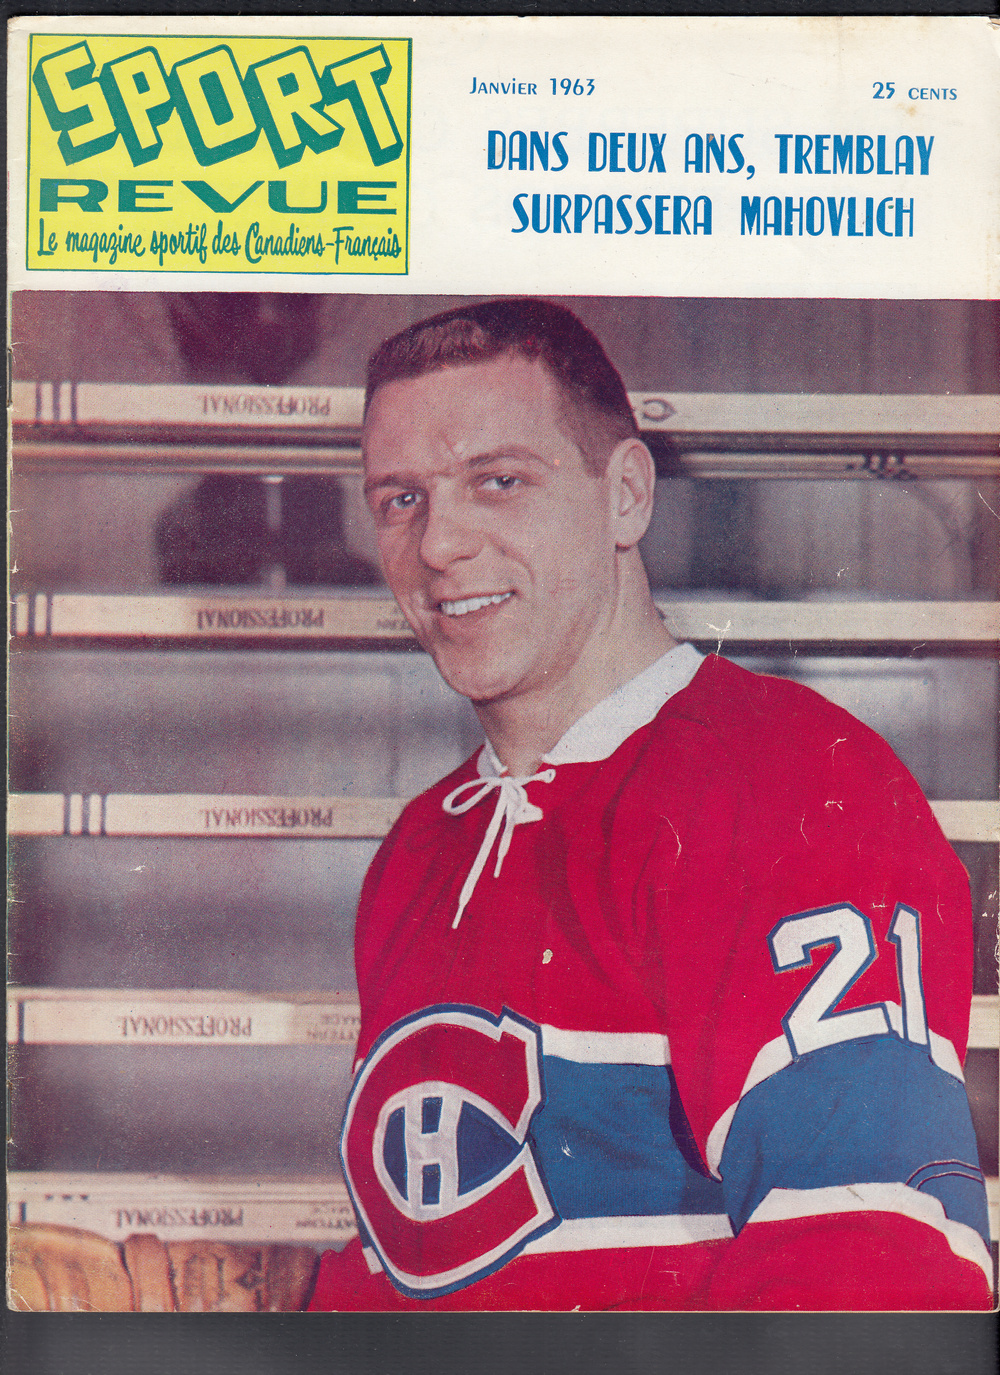 1962 SPORT REVUE MAGAZINE G. TREMBLAY ON COVER photo